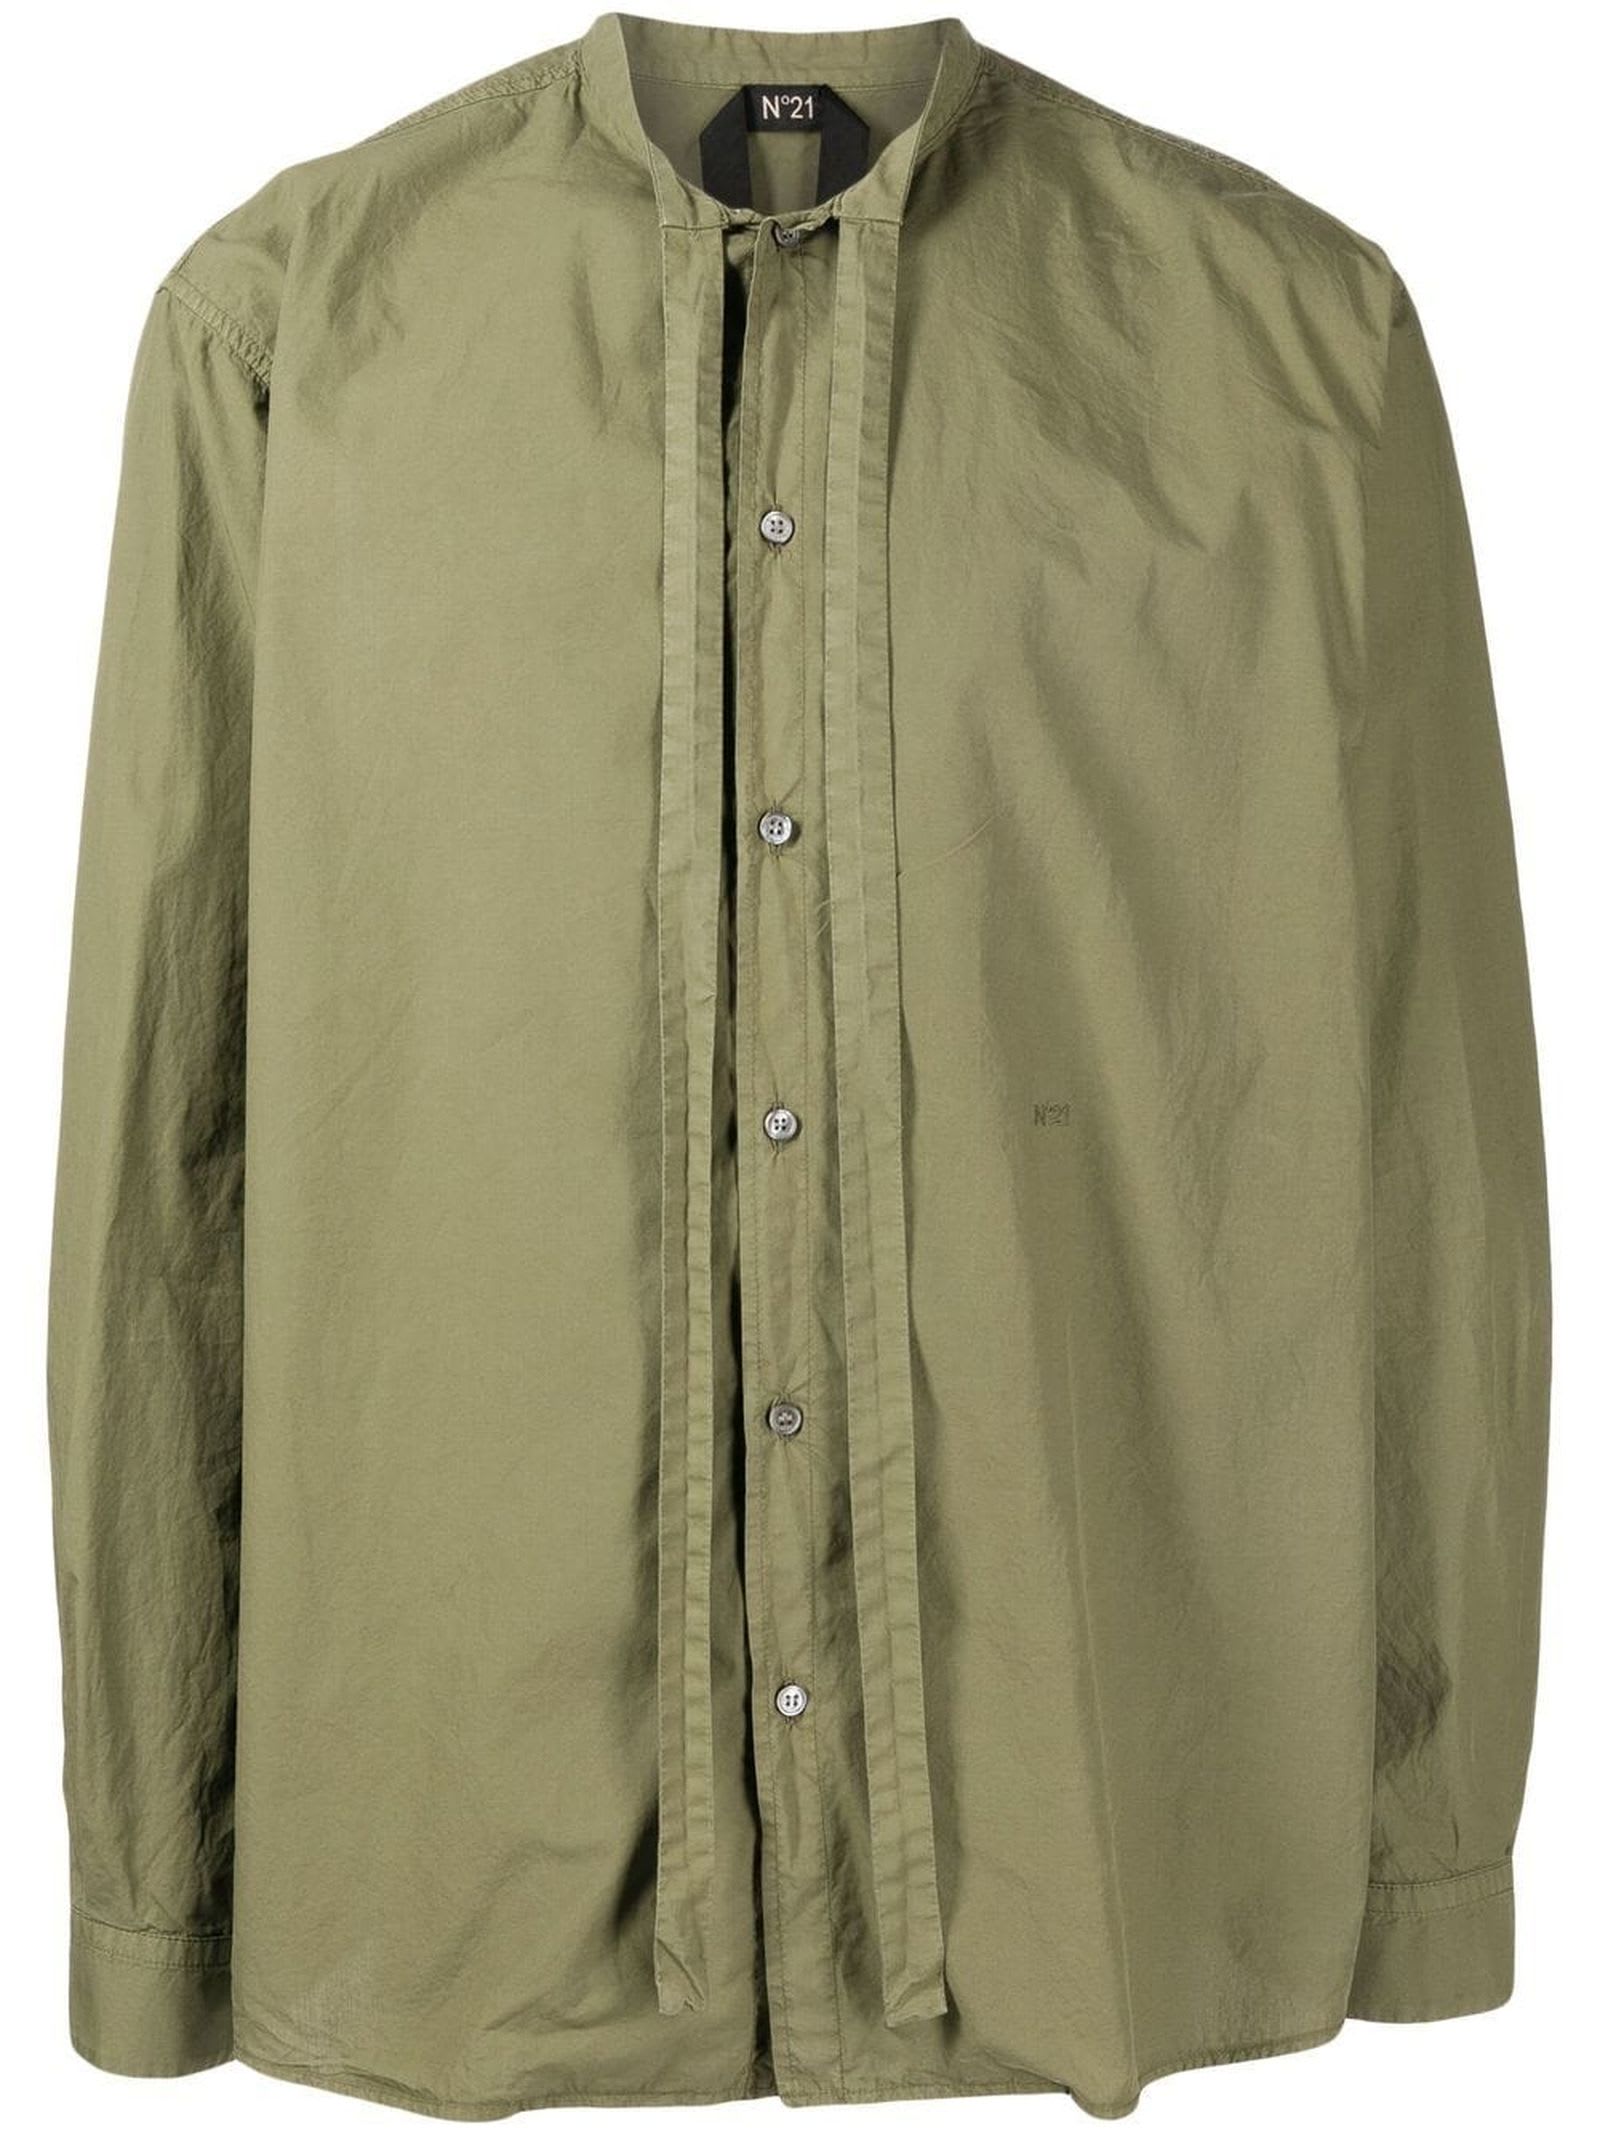 N.21 Military Green Cotton Shirt